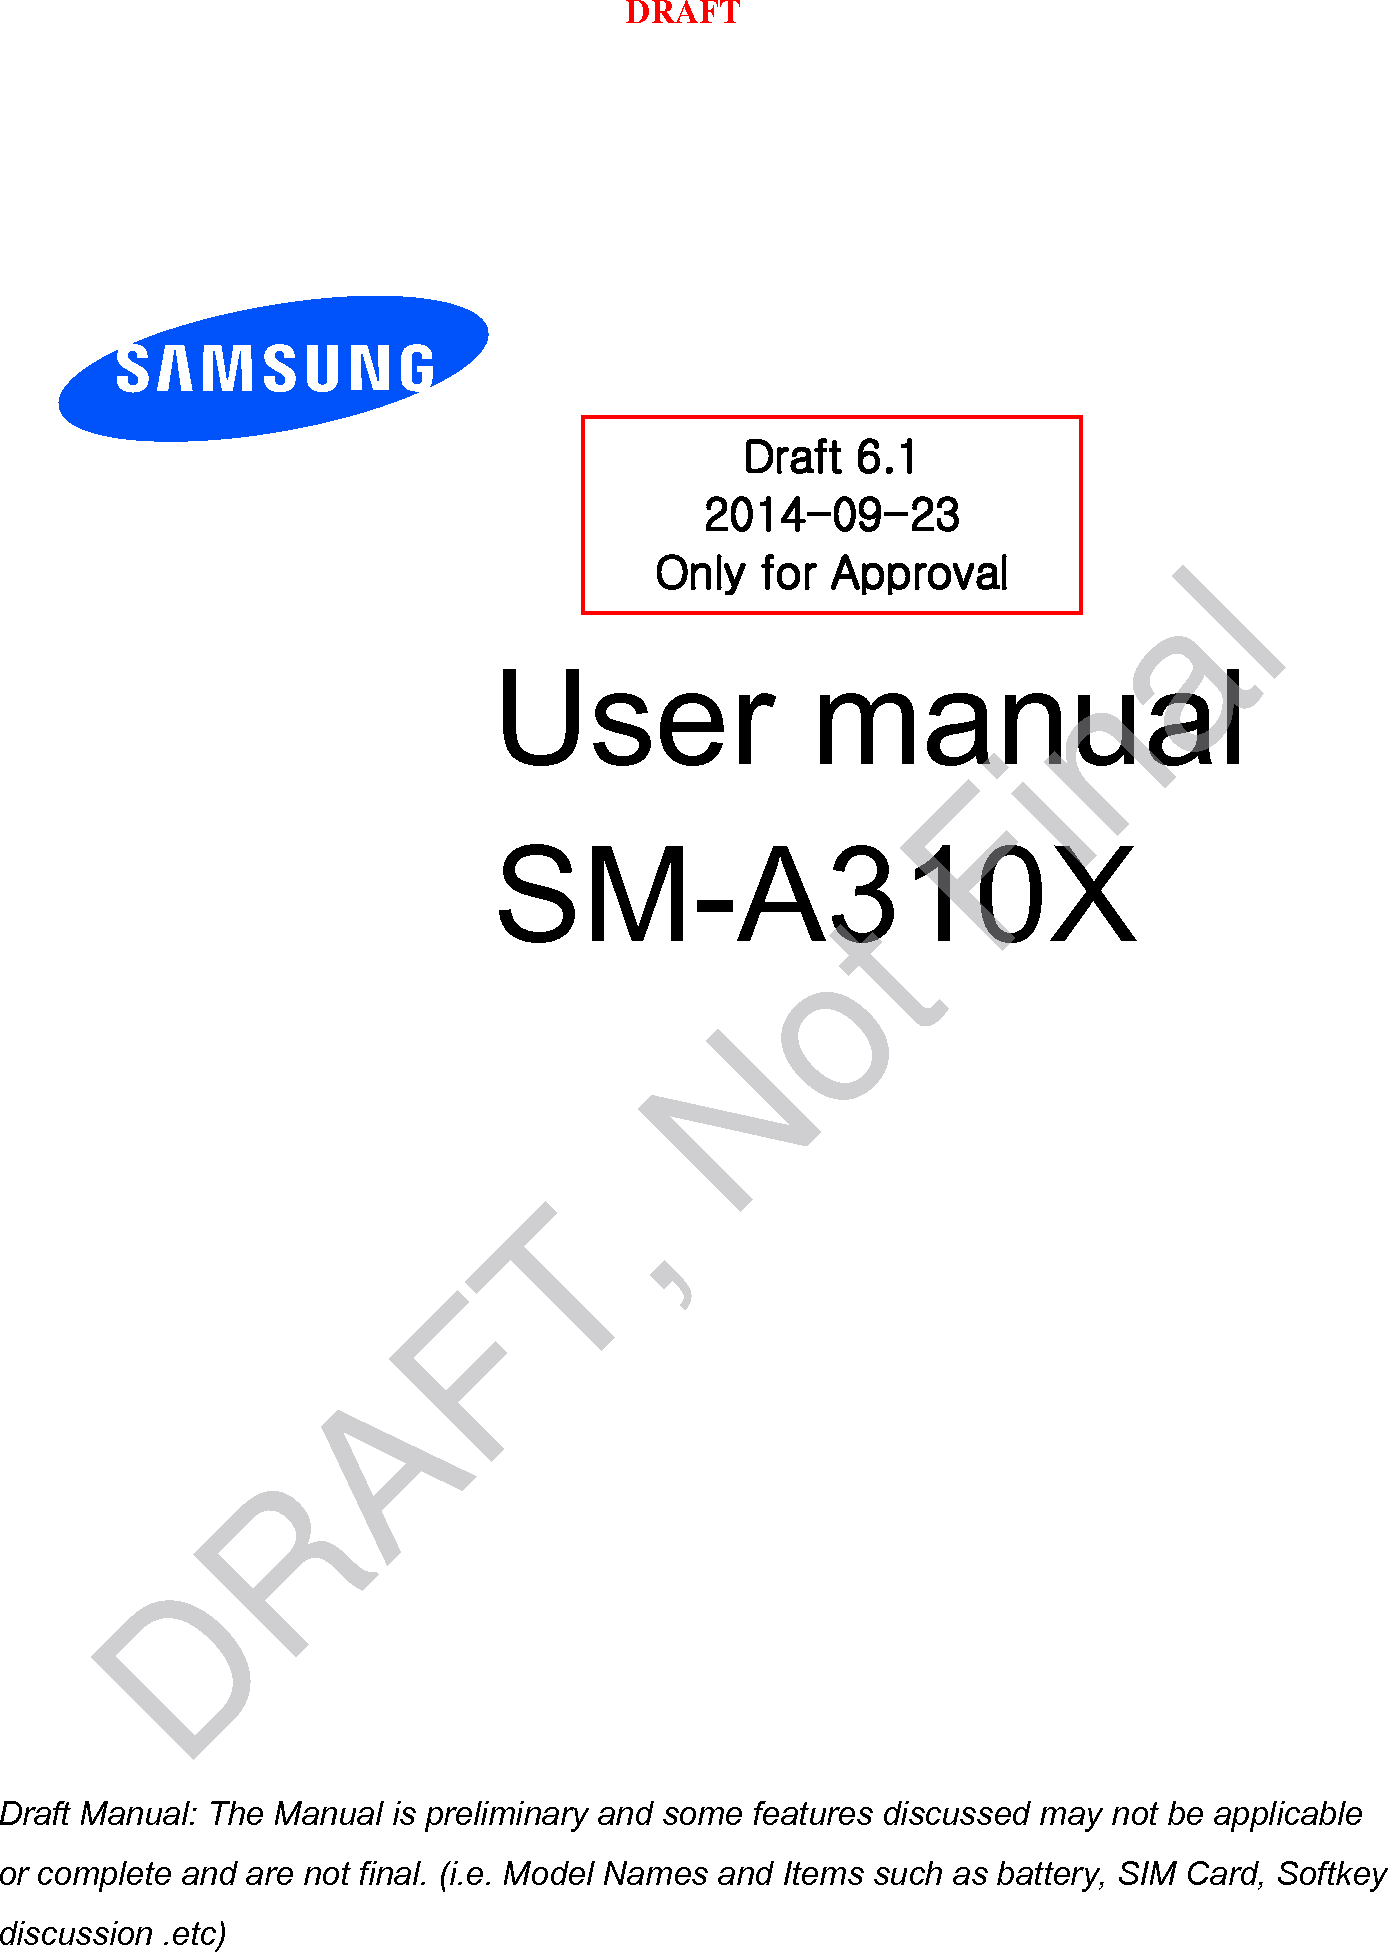 User manual SM-A310XDraft 6.1 2014-09-23 Only for Approval a ana  ana  na and  a dd a n  aa   and a n na  d a and   a a  ad  dn DRAFT, Not FinalDRAFT